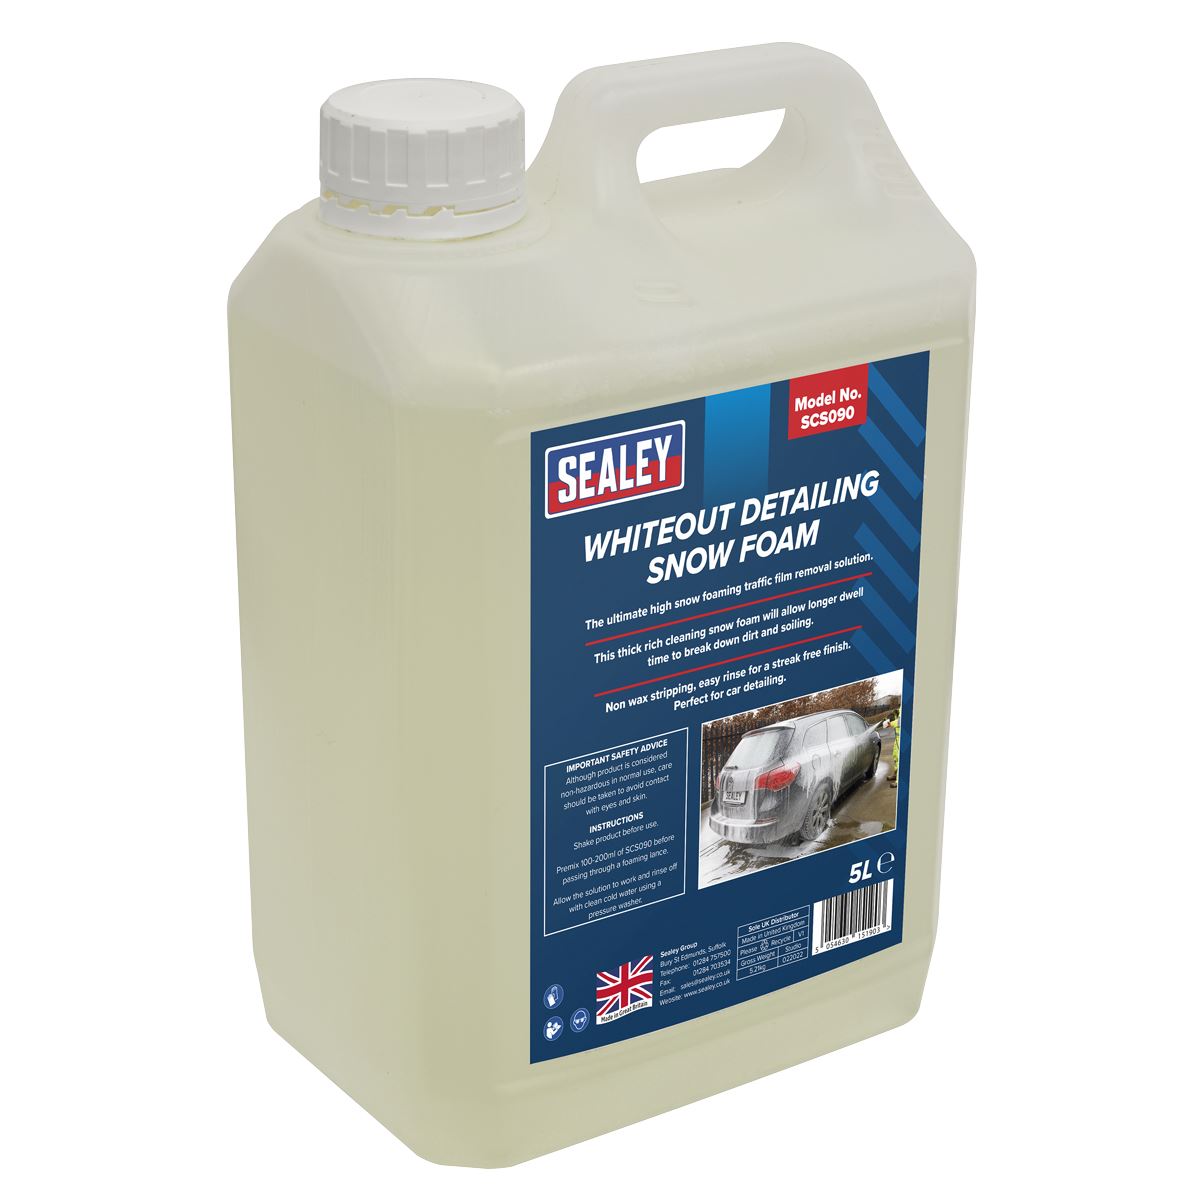 Sealey Pressure Washer 100bar 390L/hr with Snow Foam